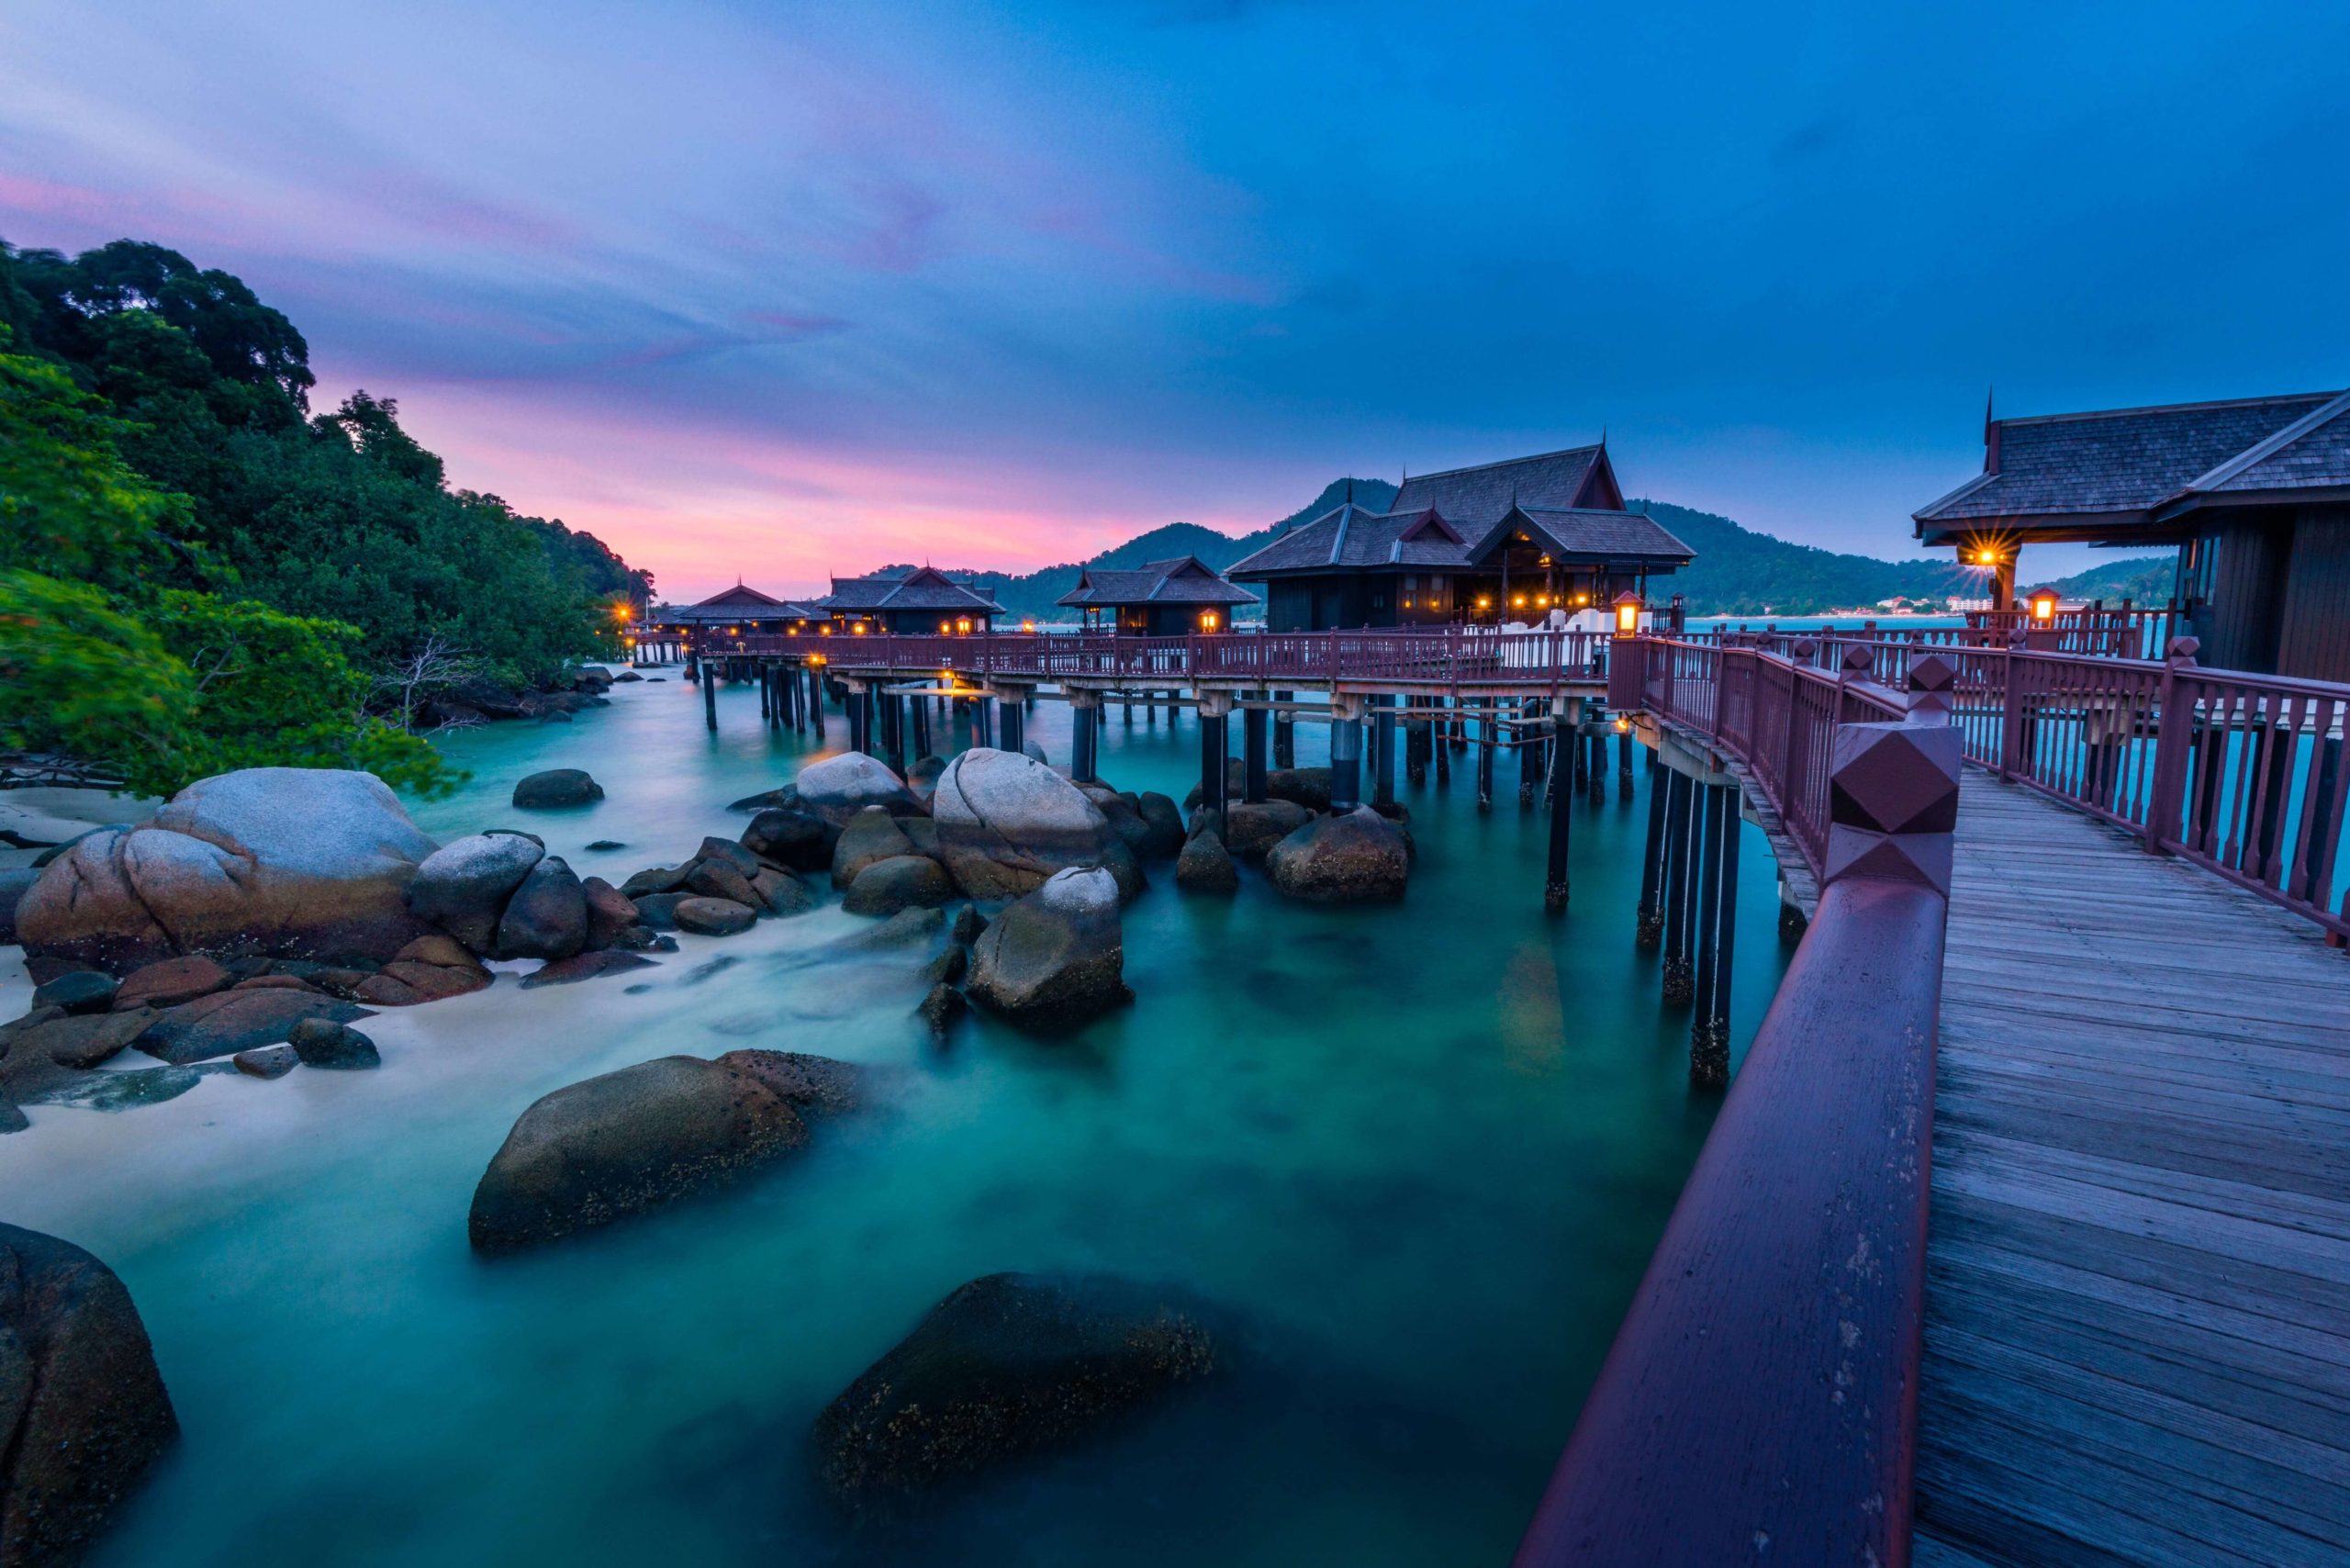 Yuk Bersantai Di Pulau Pangkor Tempat Yang Cocok Untuk Menenangkan Pikiran Dan Jiwa Di Malaysia